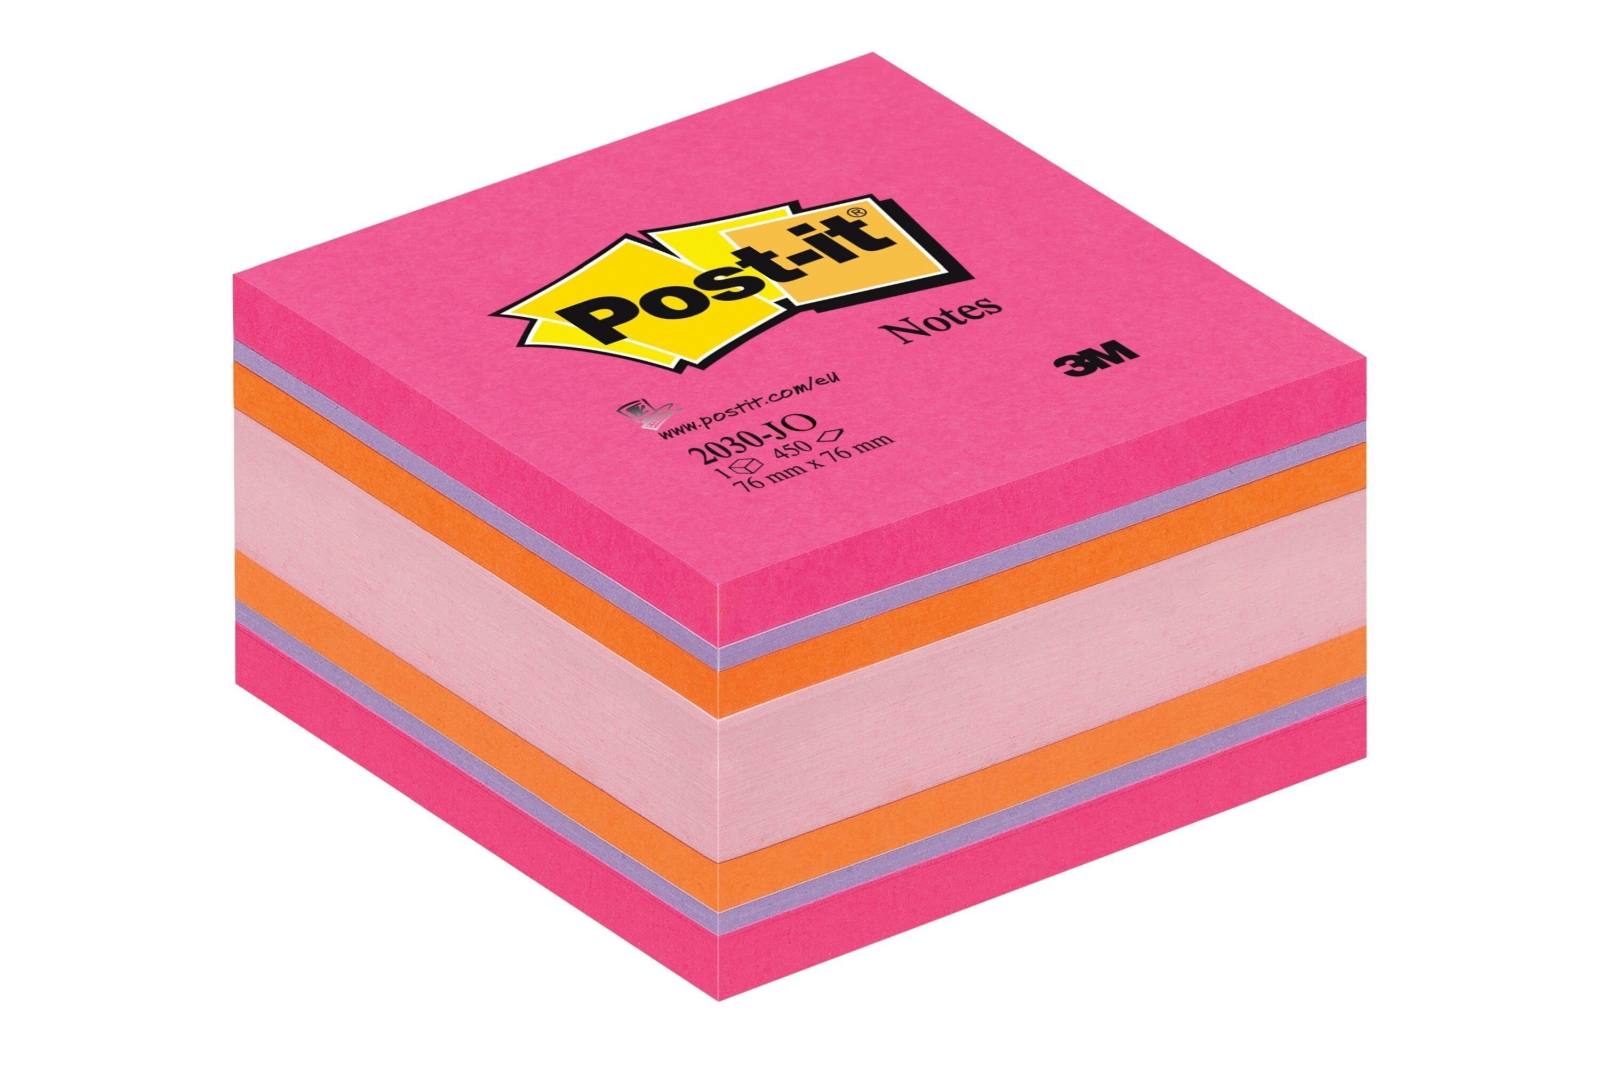 3M Post-it Mini Würfel 2051-P, 51 mm x 51 mm, neonpink, orange, pink, 1 Würfel à 400 Blatt